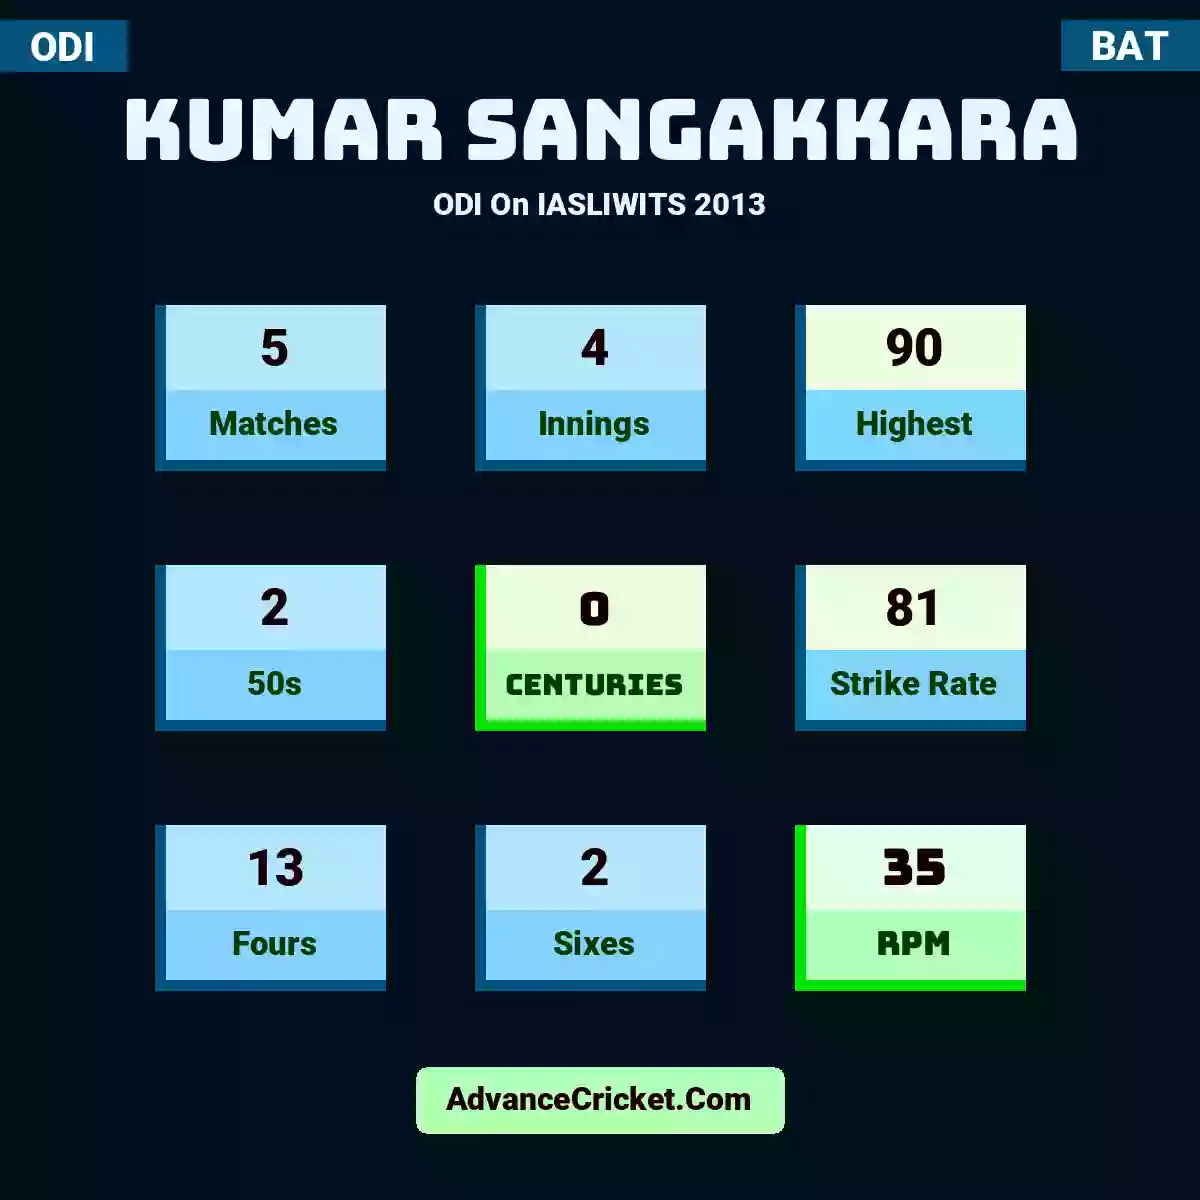 Kumar Sangakkara ODI  On IASLIWITS 2013, Kumar Sangakkara played 5 matches, scored 90 runs as highest, 2 half-centuries, and 0 centuries, with a strike rate of 81. K.Sangakkara hit 13 fours and 2 sixes, with an RPM of 35.